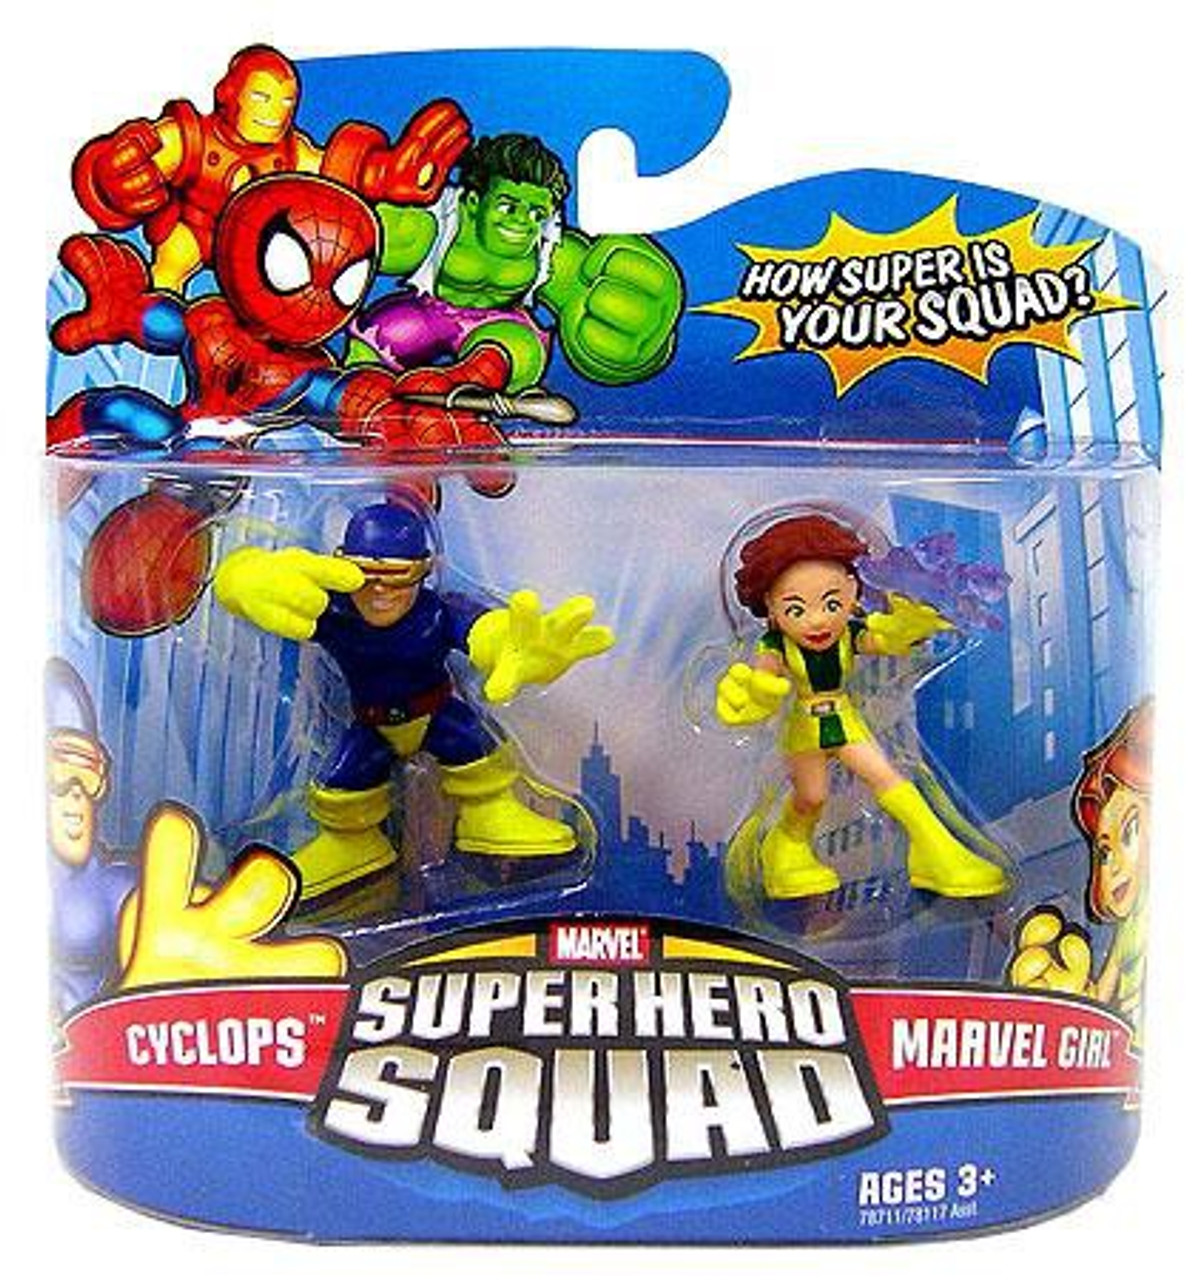 Marvel Super Hero Squad Series 11 Cyclops Marvel Girl 3 Mini Figure 2 Pack Hasbro Toys Toywiz - cyclops roblox package